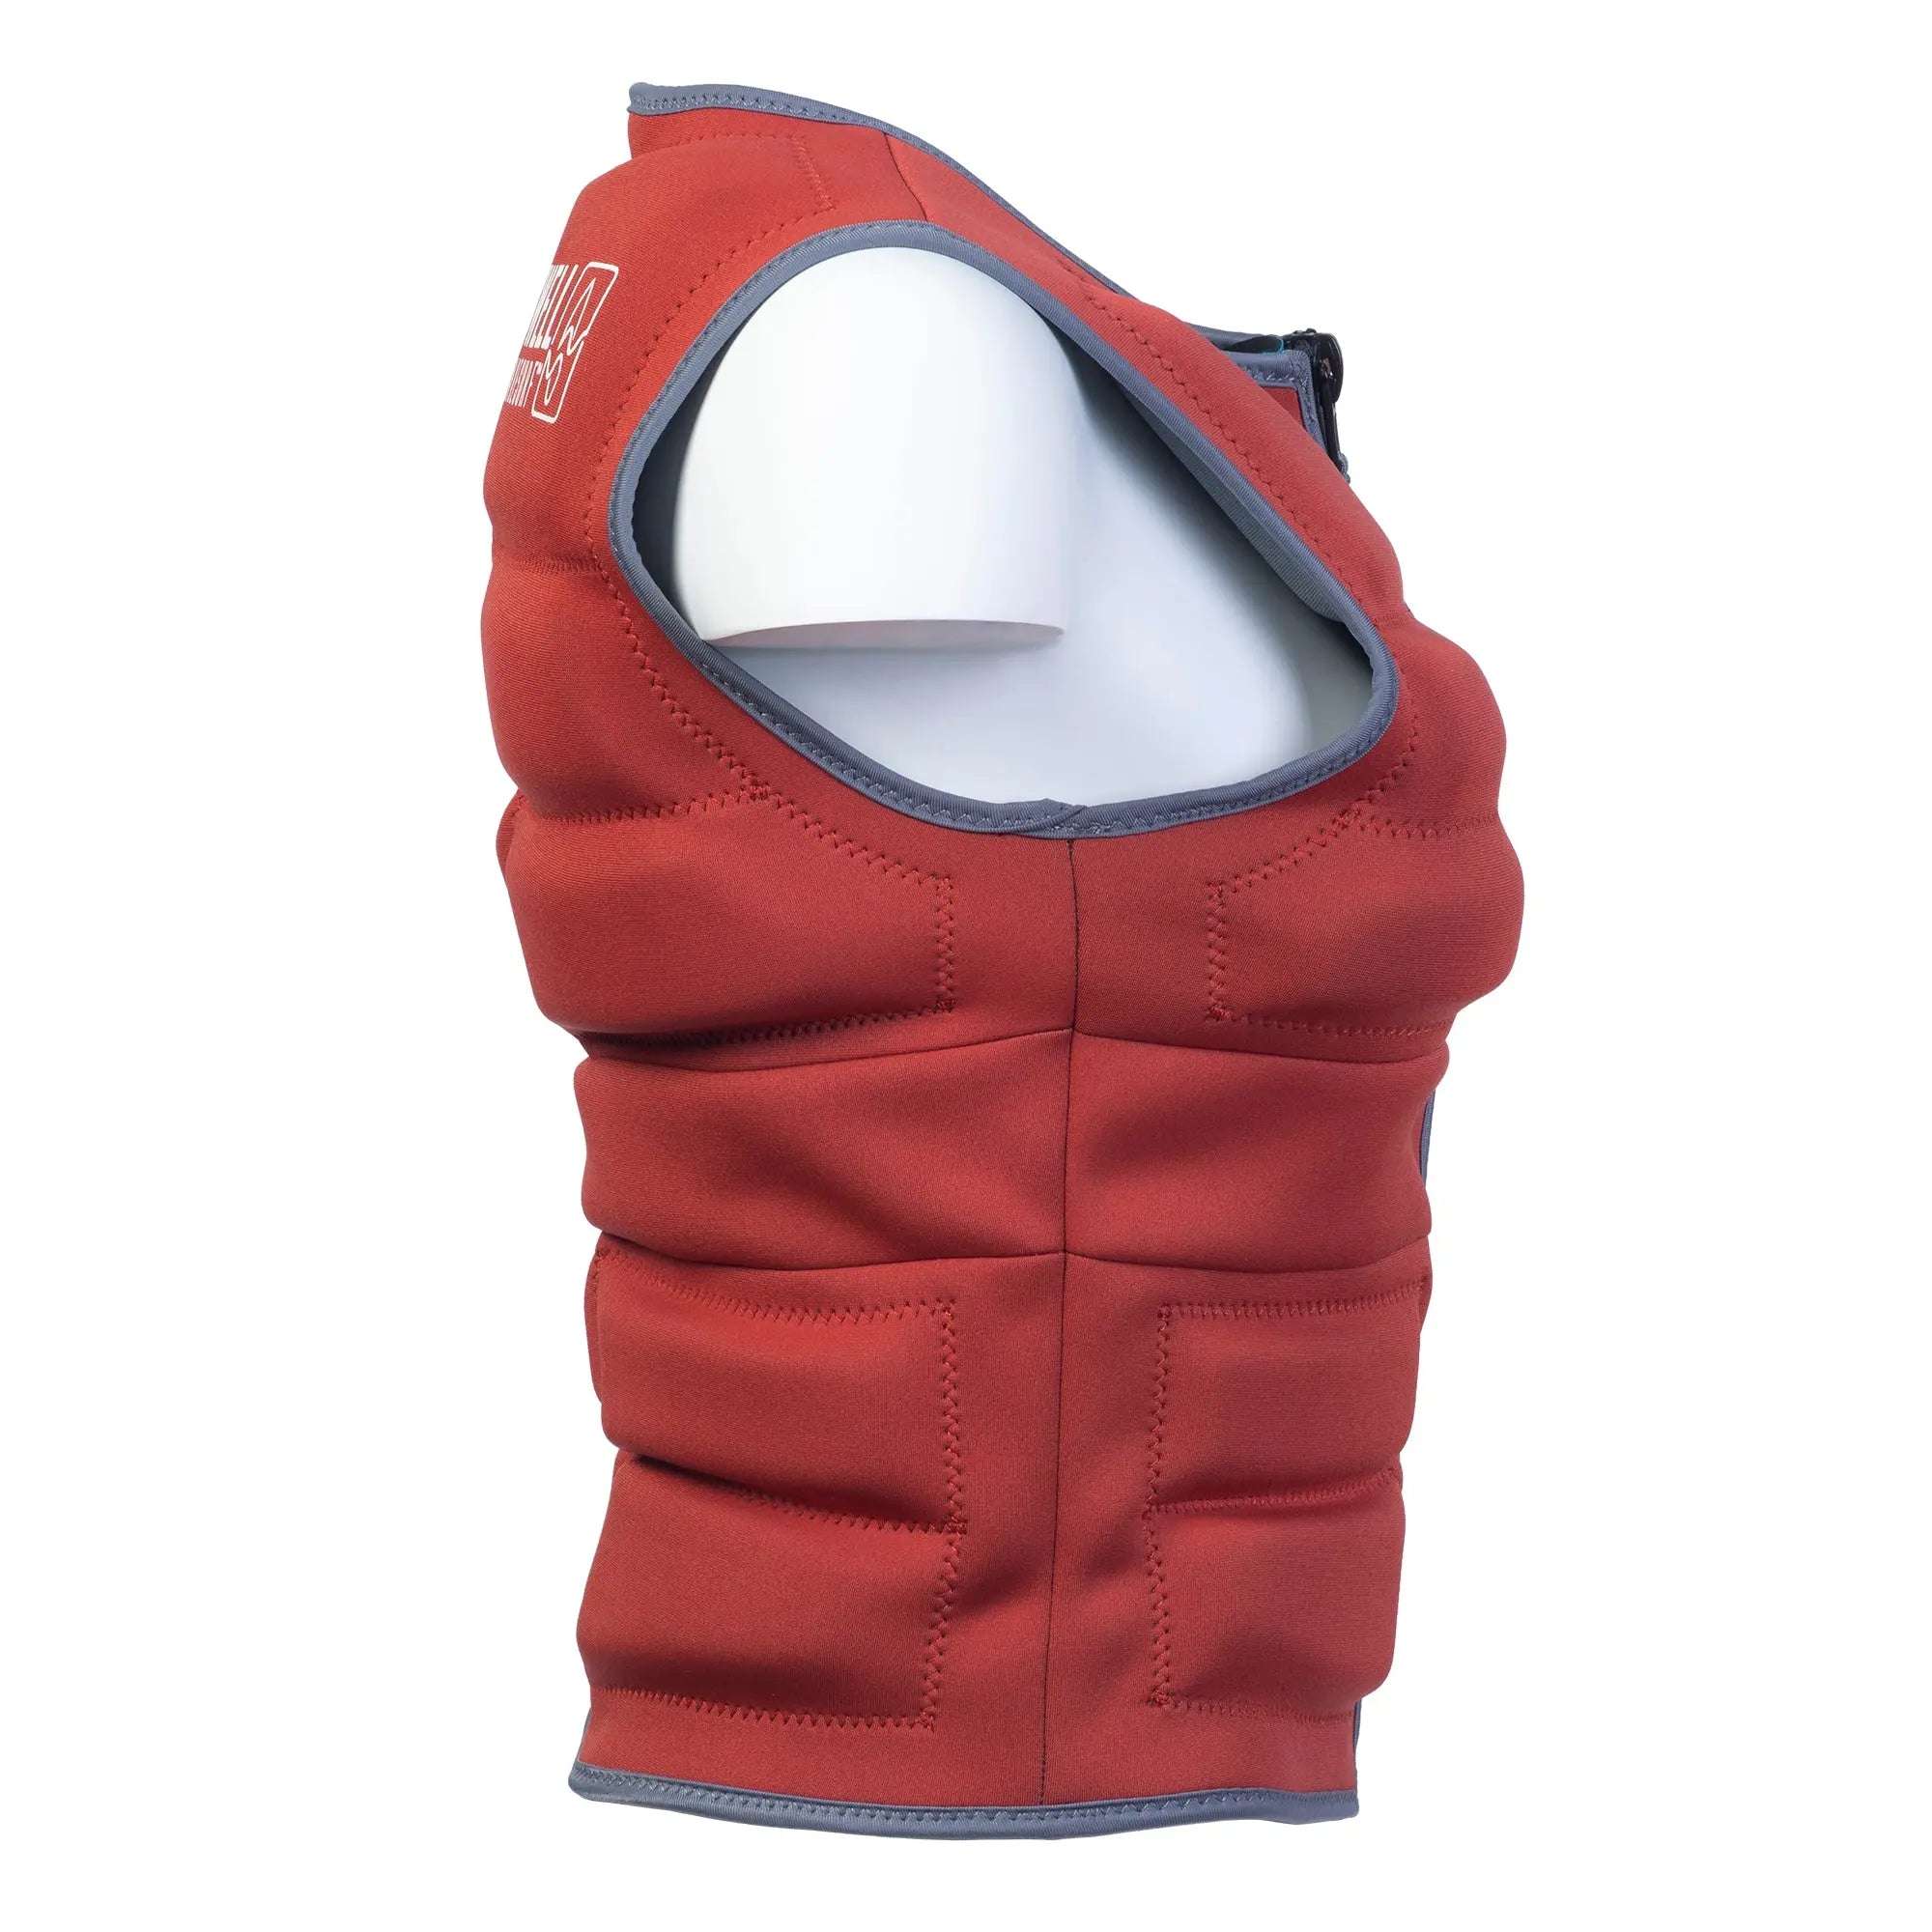 SWELL Wakesurf Vest - Women's Rust - Ultimate Comfort Neoprene Jacket - WEBSITE EXCLUSIVE COLOR! SWELL Wakesurf